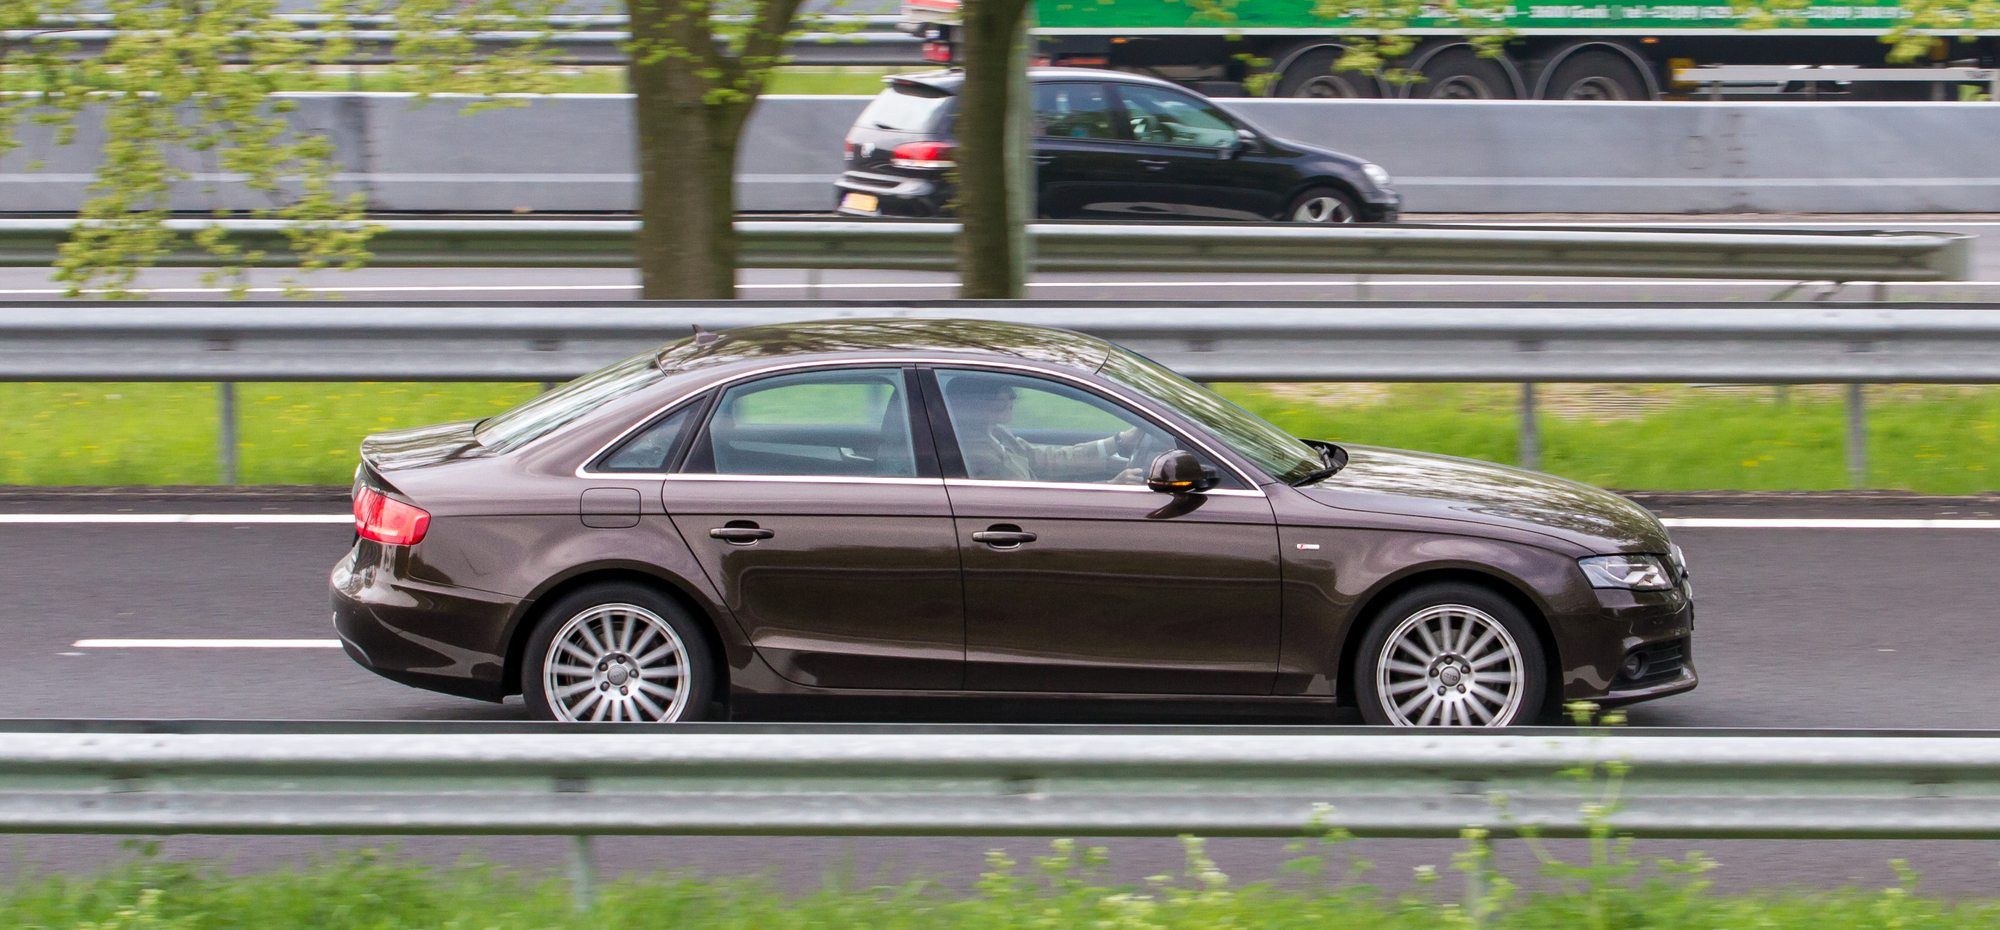 Brown Audi A4 regarding the Audi start/stop defect class action lawsuit